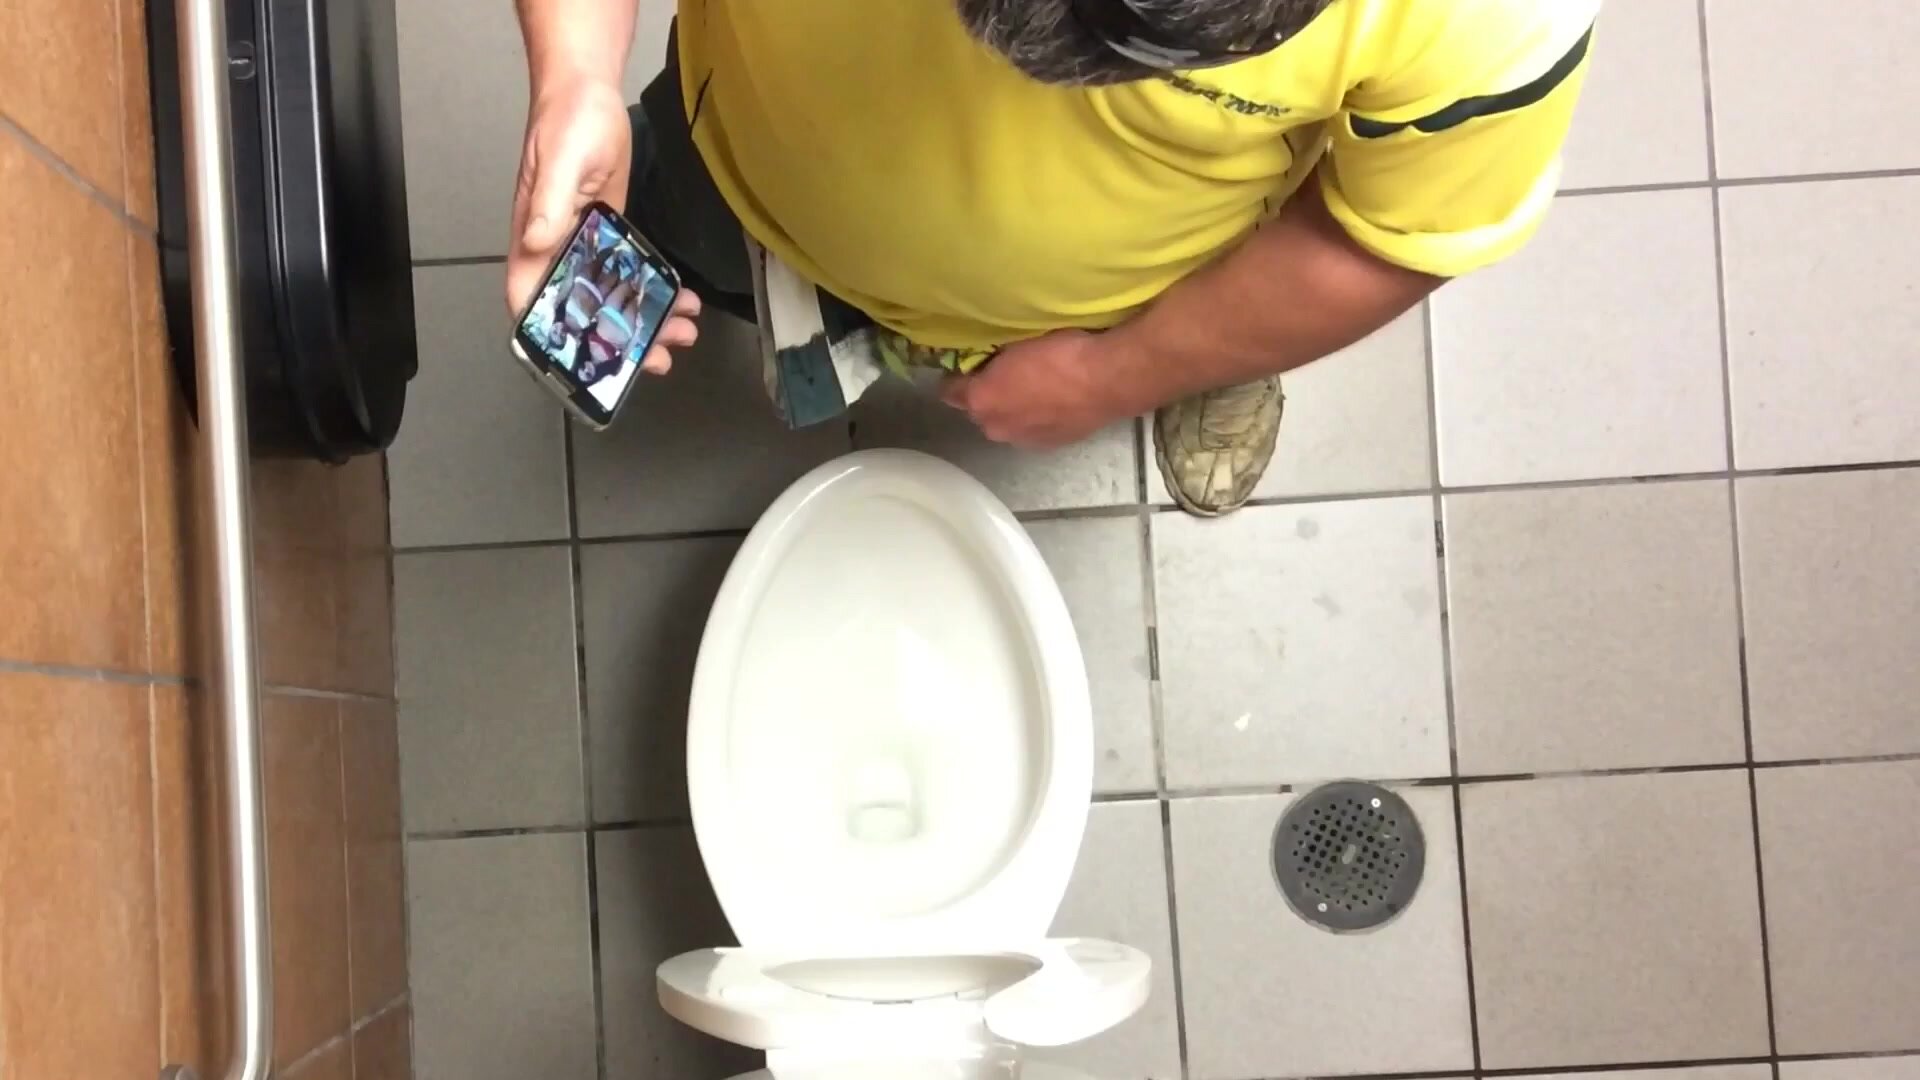 pissing video of men in public toilet 14